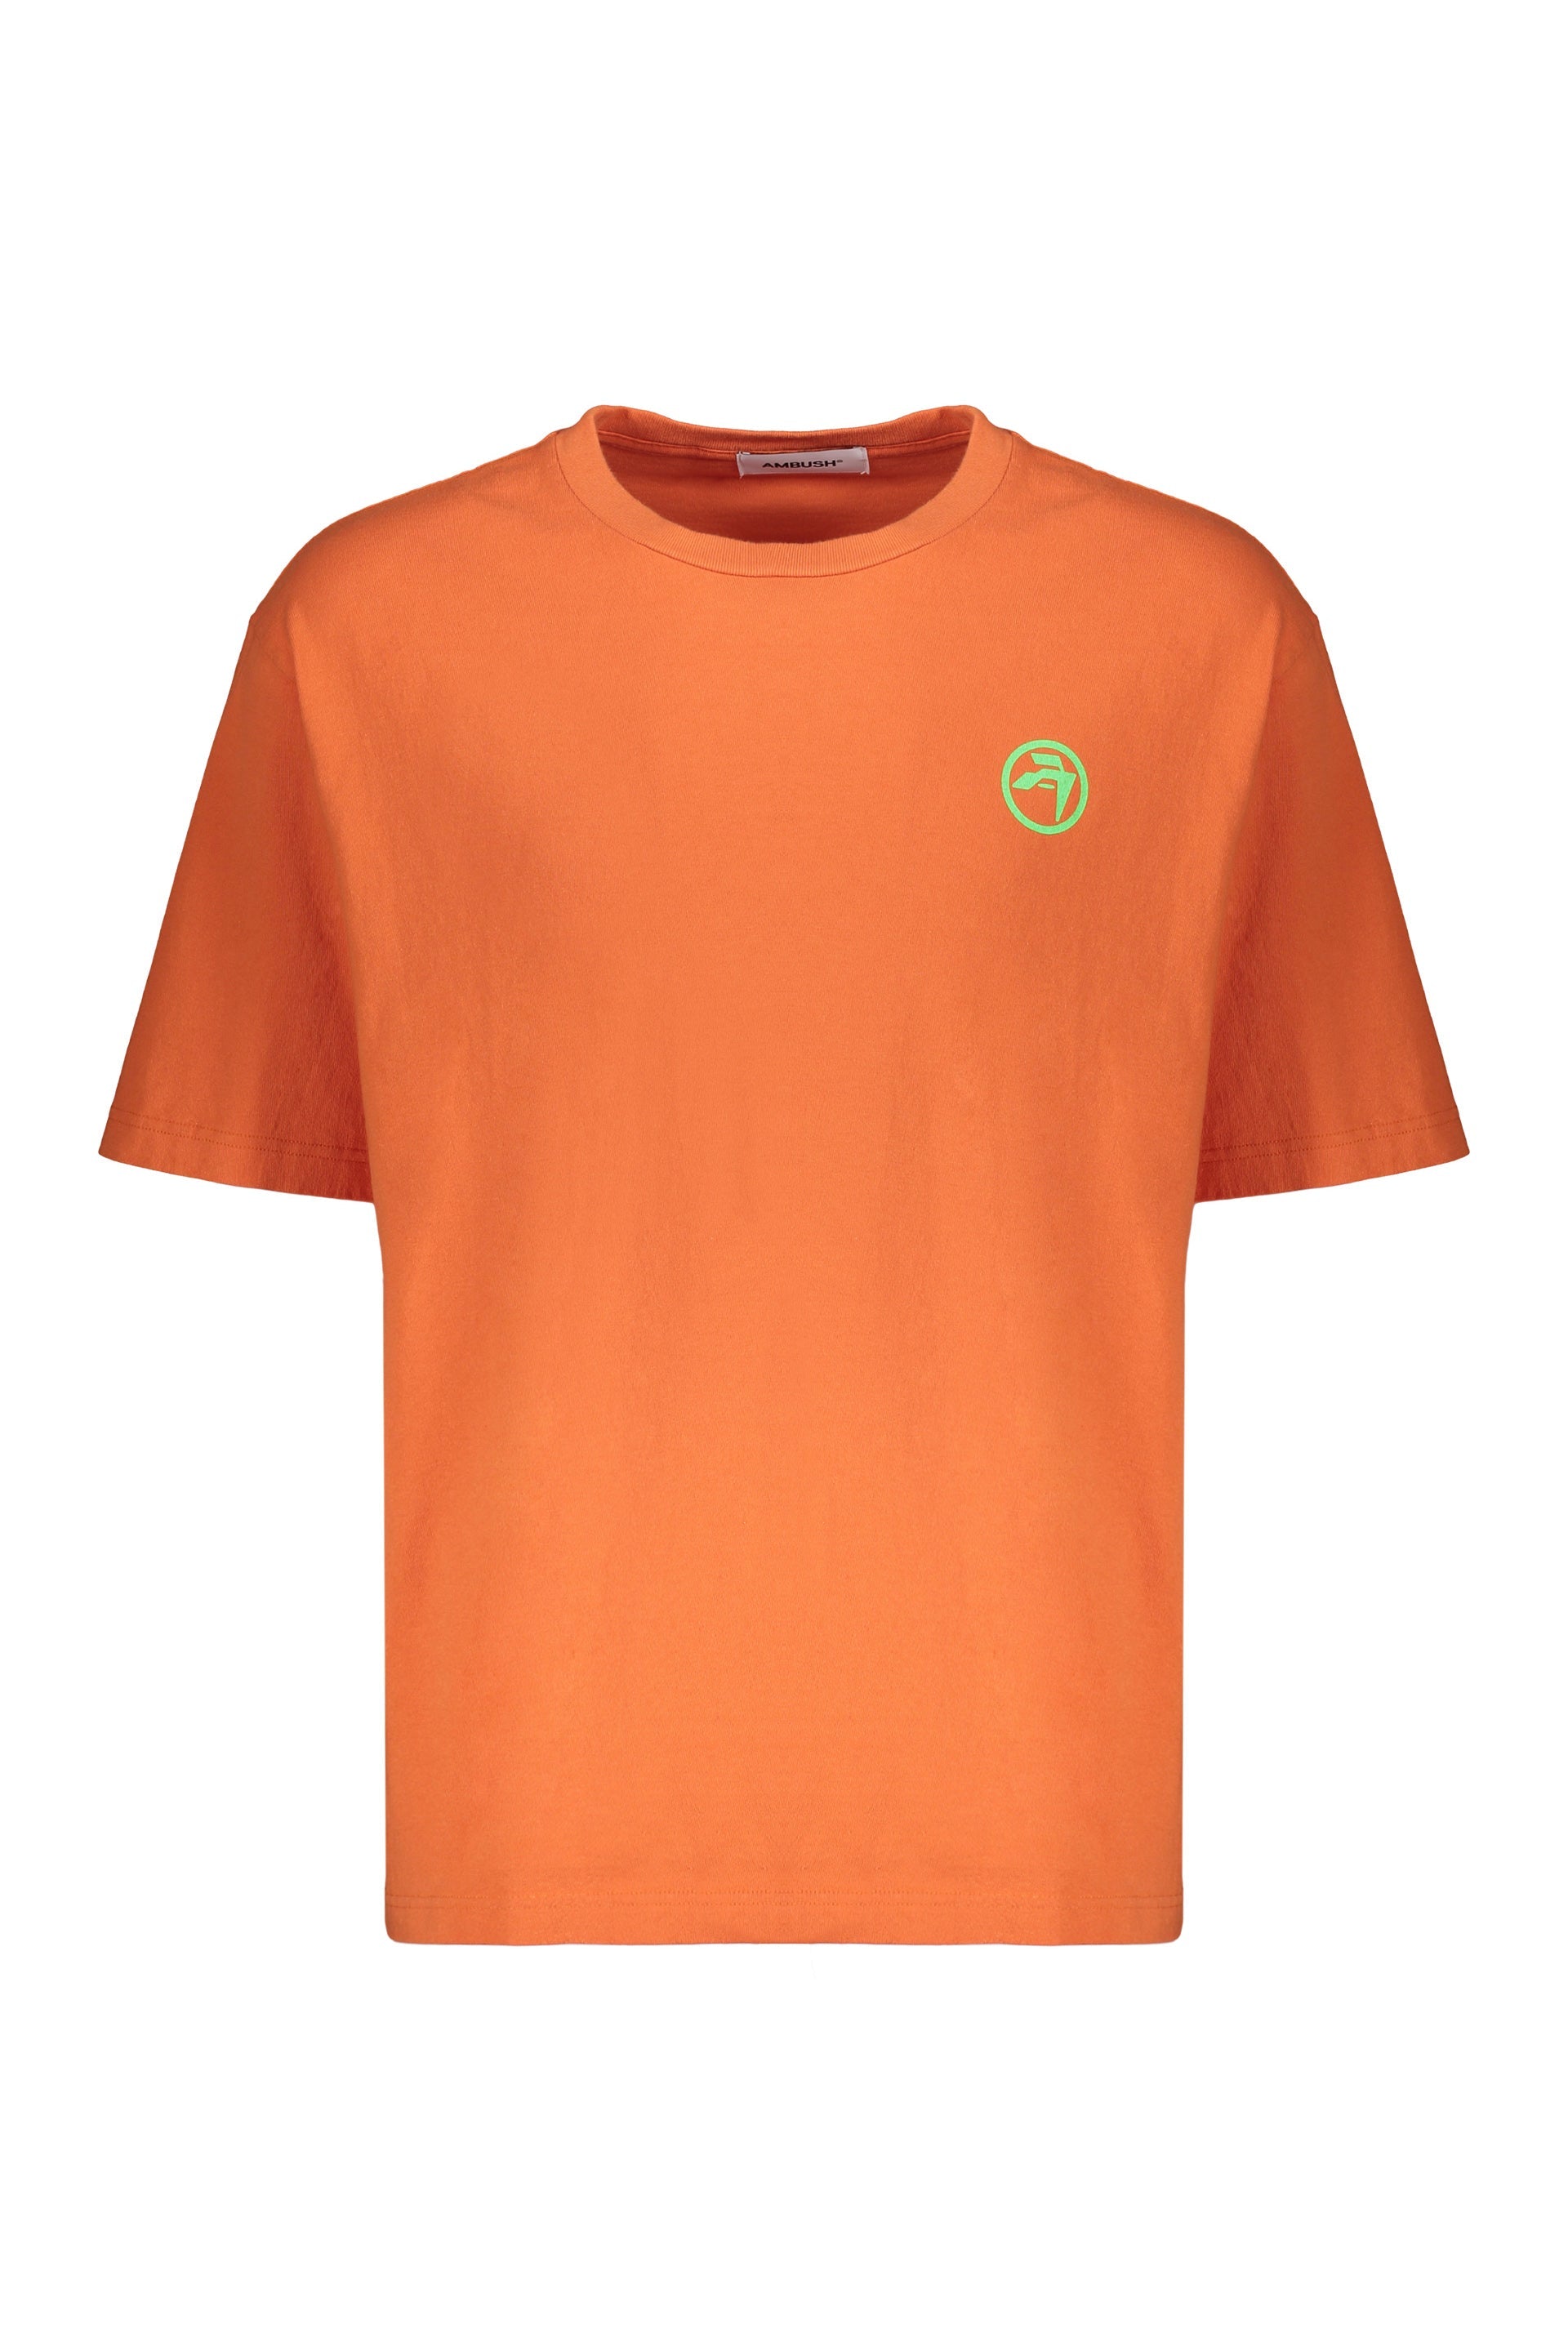 AMBUSH-OUTLET-SALE-Cotton-T-shirt-Shirts-L-ARCHIVE-COLLECTION_9b67c9bb-886a-49c3-b10f-4bbc14f95b69.jpg